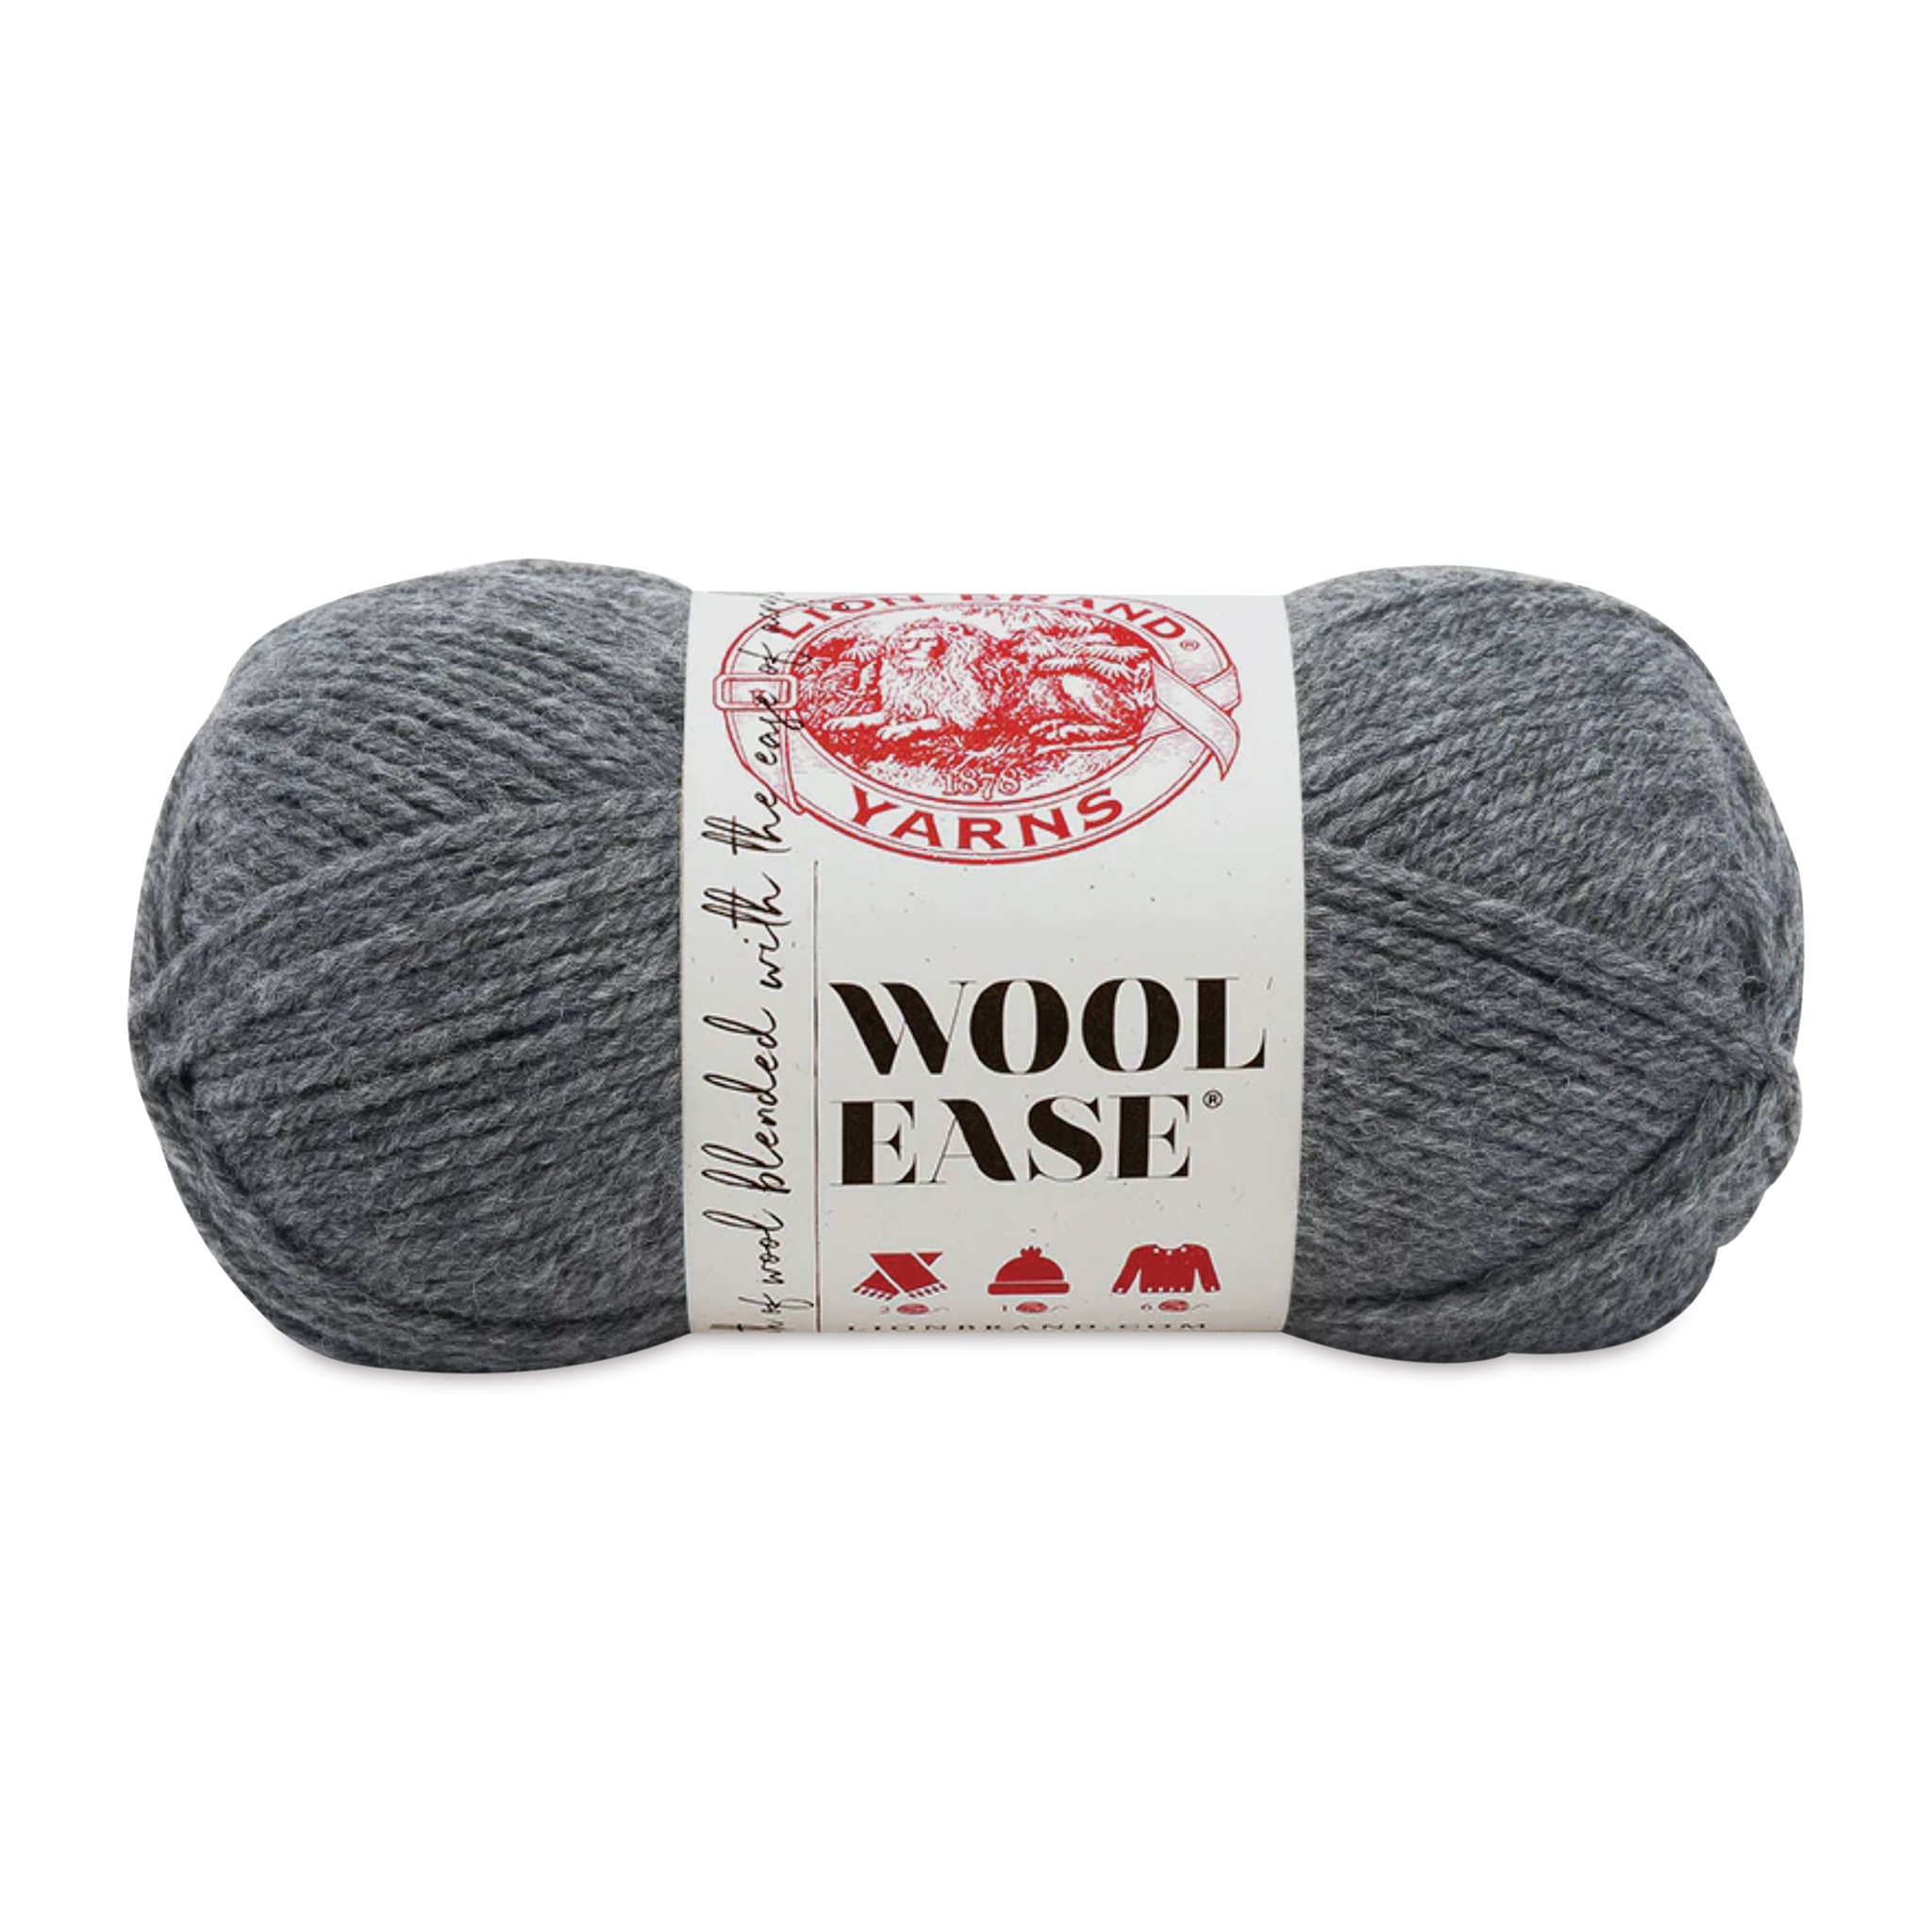 Lion Brand Wool-Ease Yarn - Oxford Gray